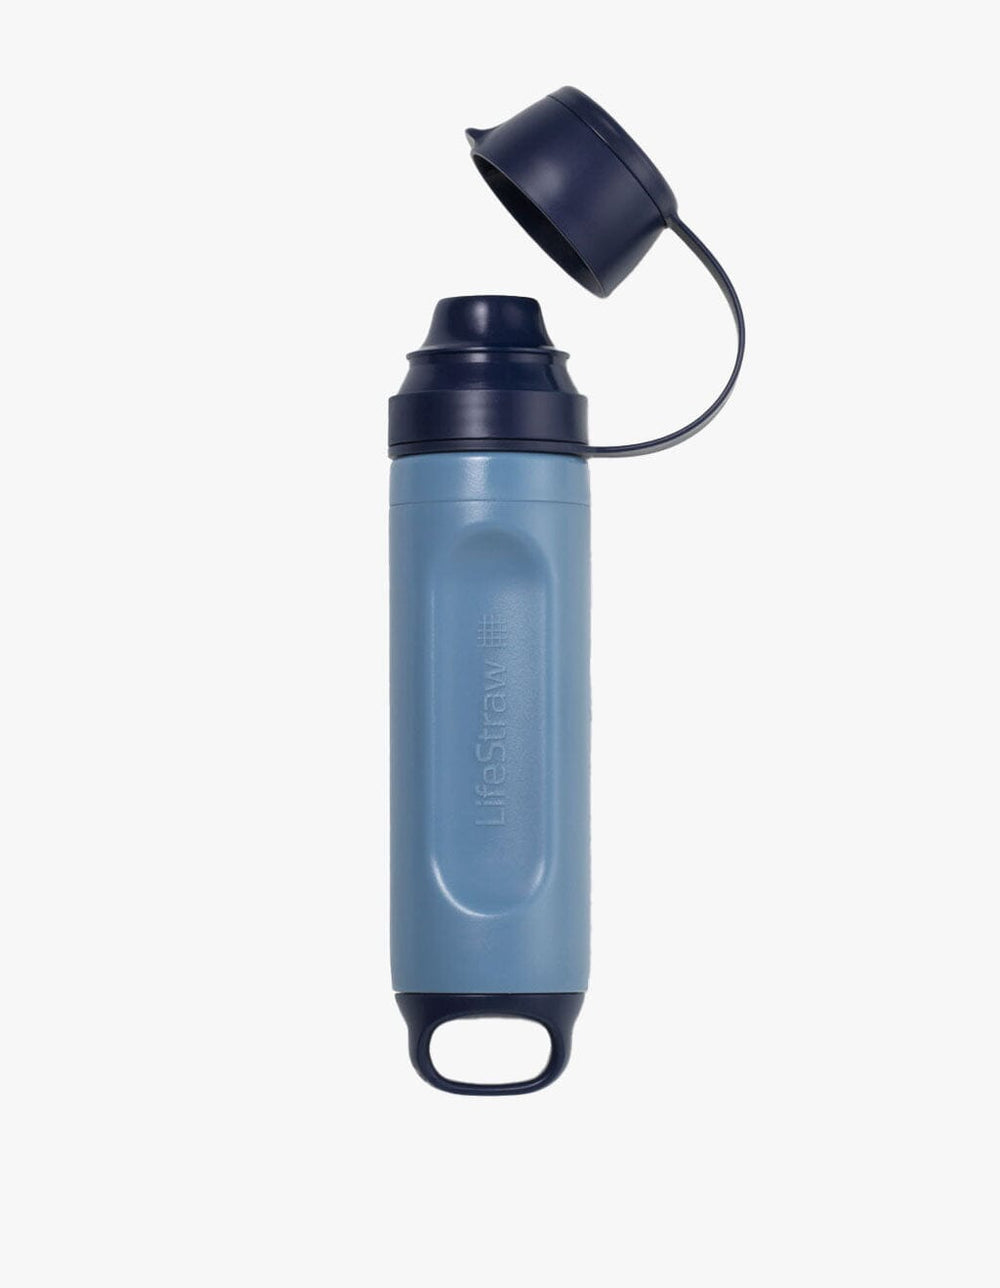 LifeStraw Peak Series Solo Water Filter